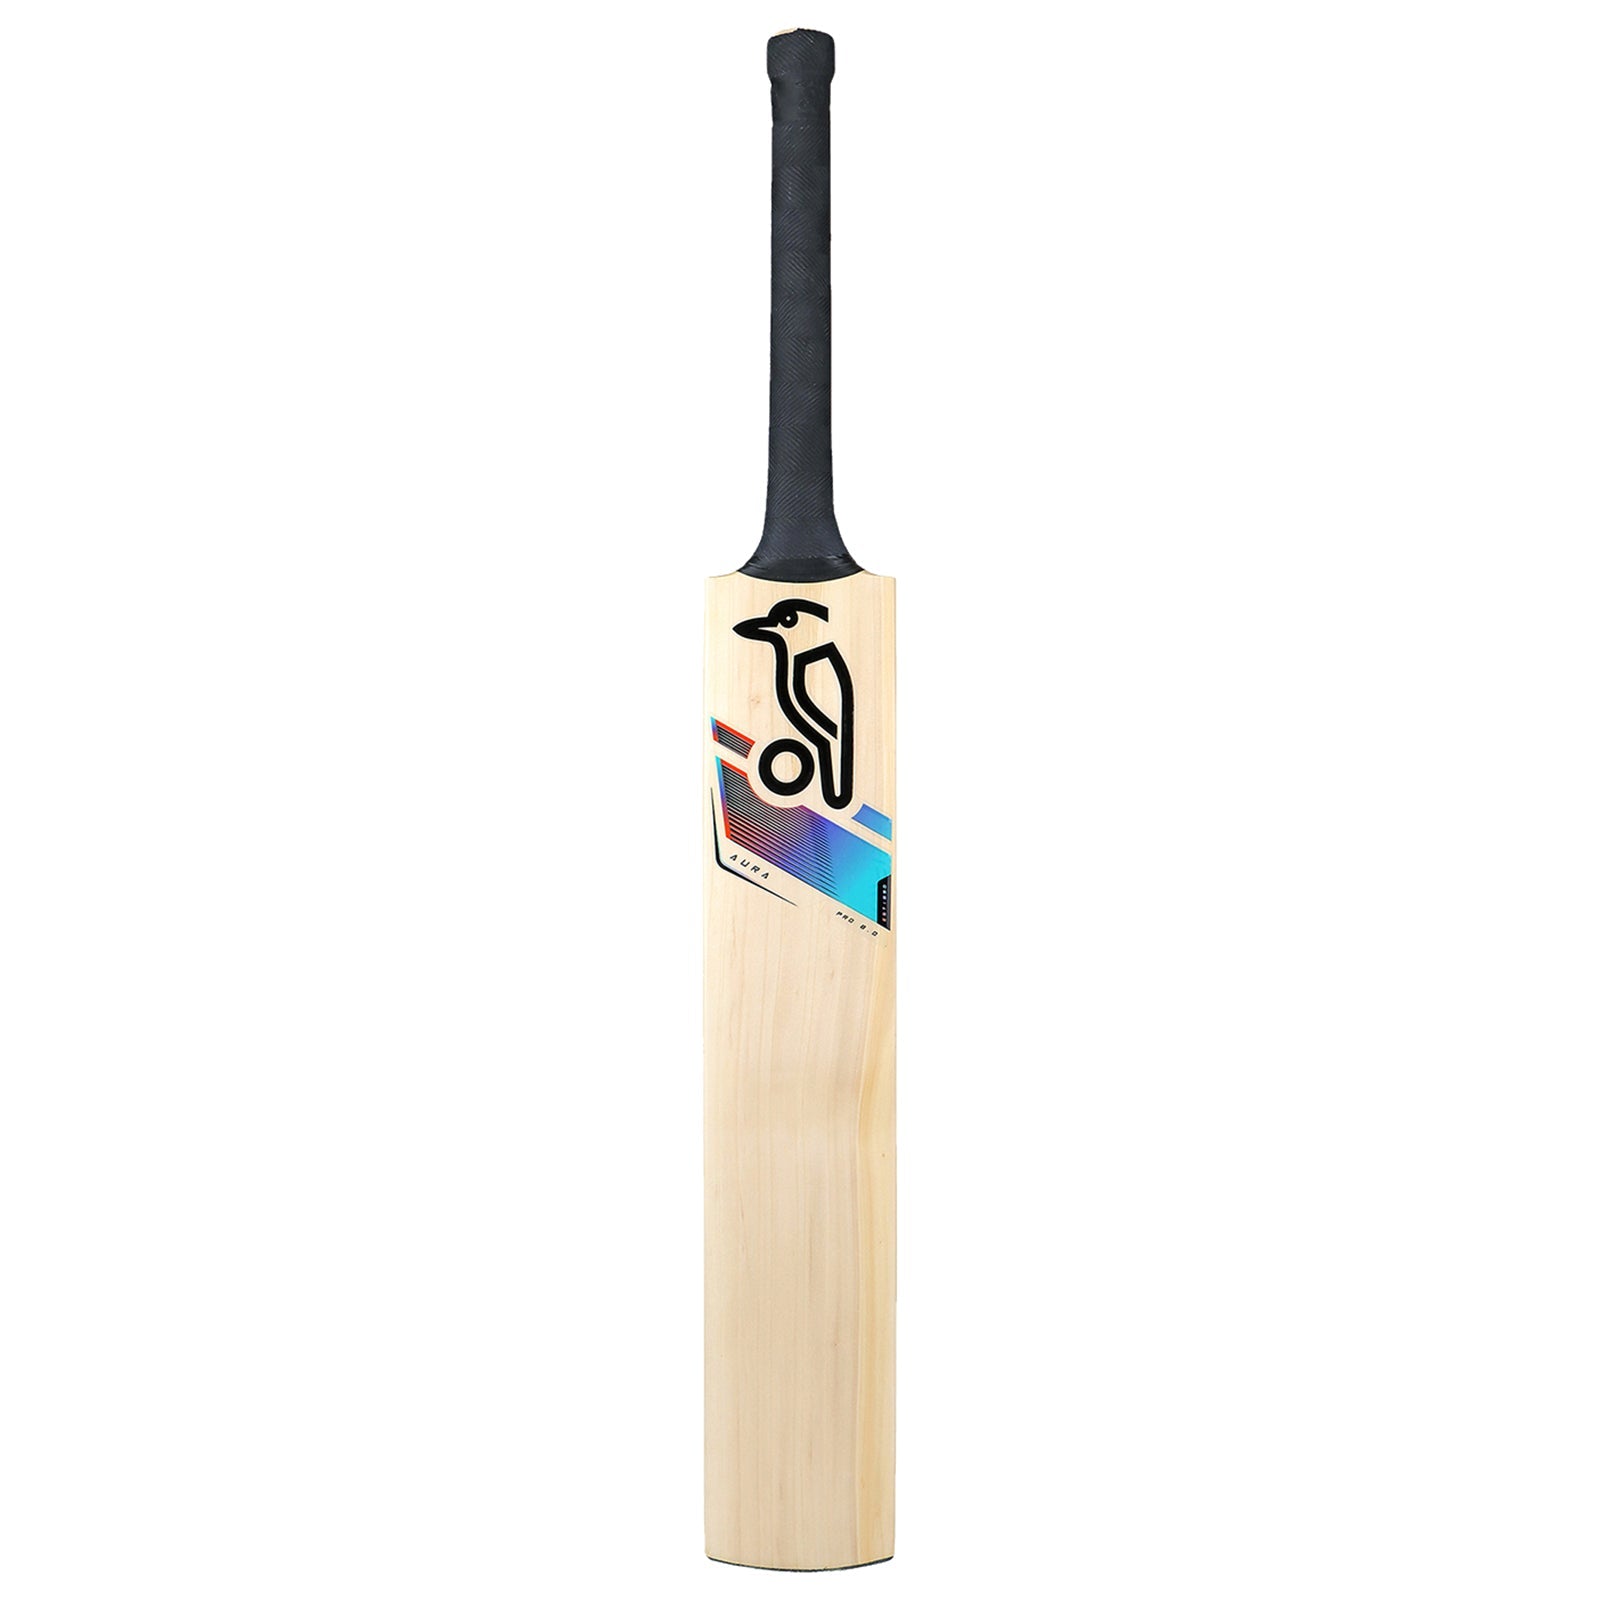 Kookaburra Aura Pro 8.0 Kashmir Willow Cricket Bat - Harrow